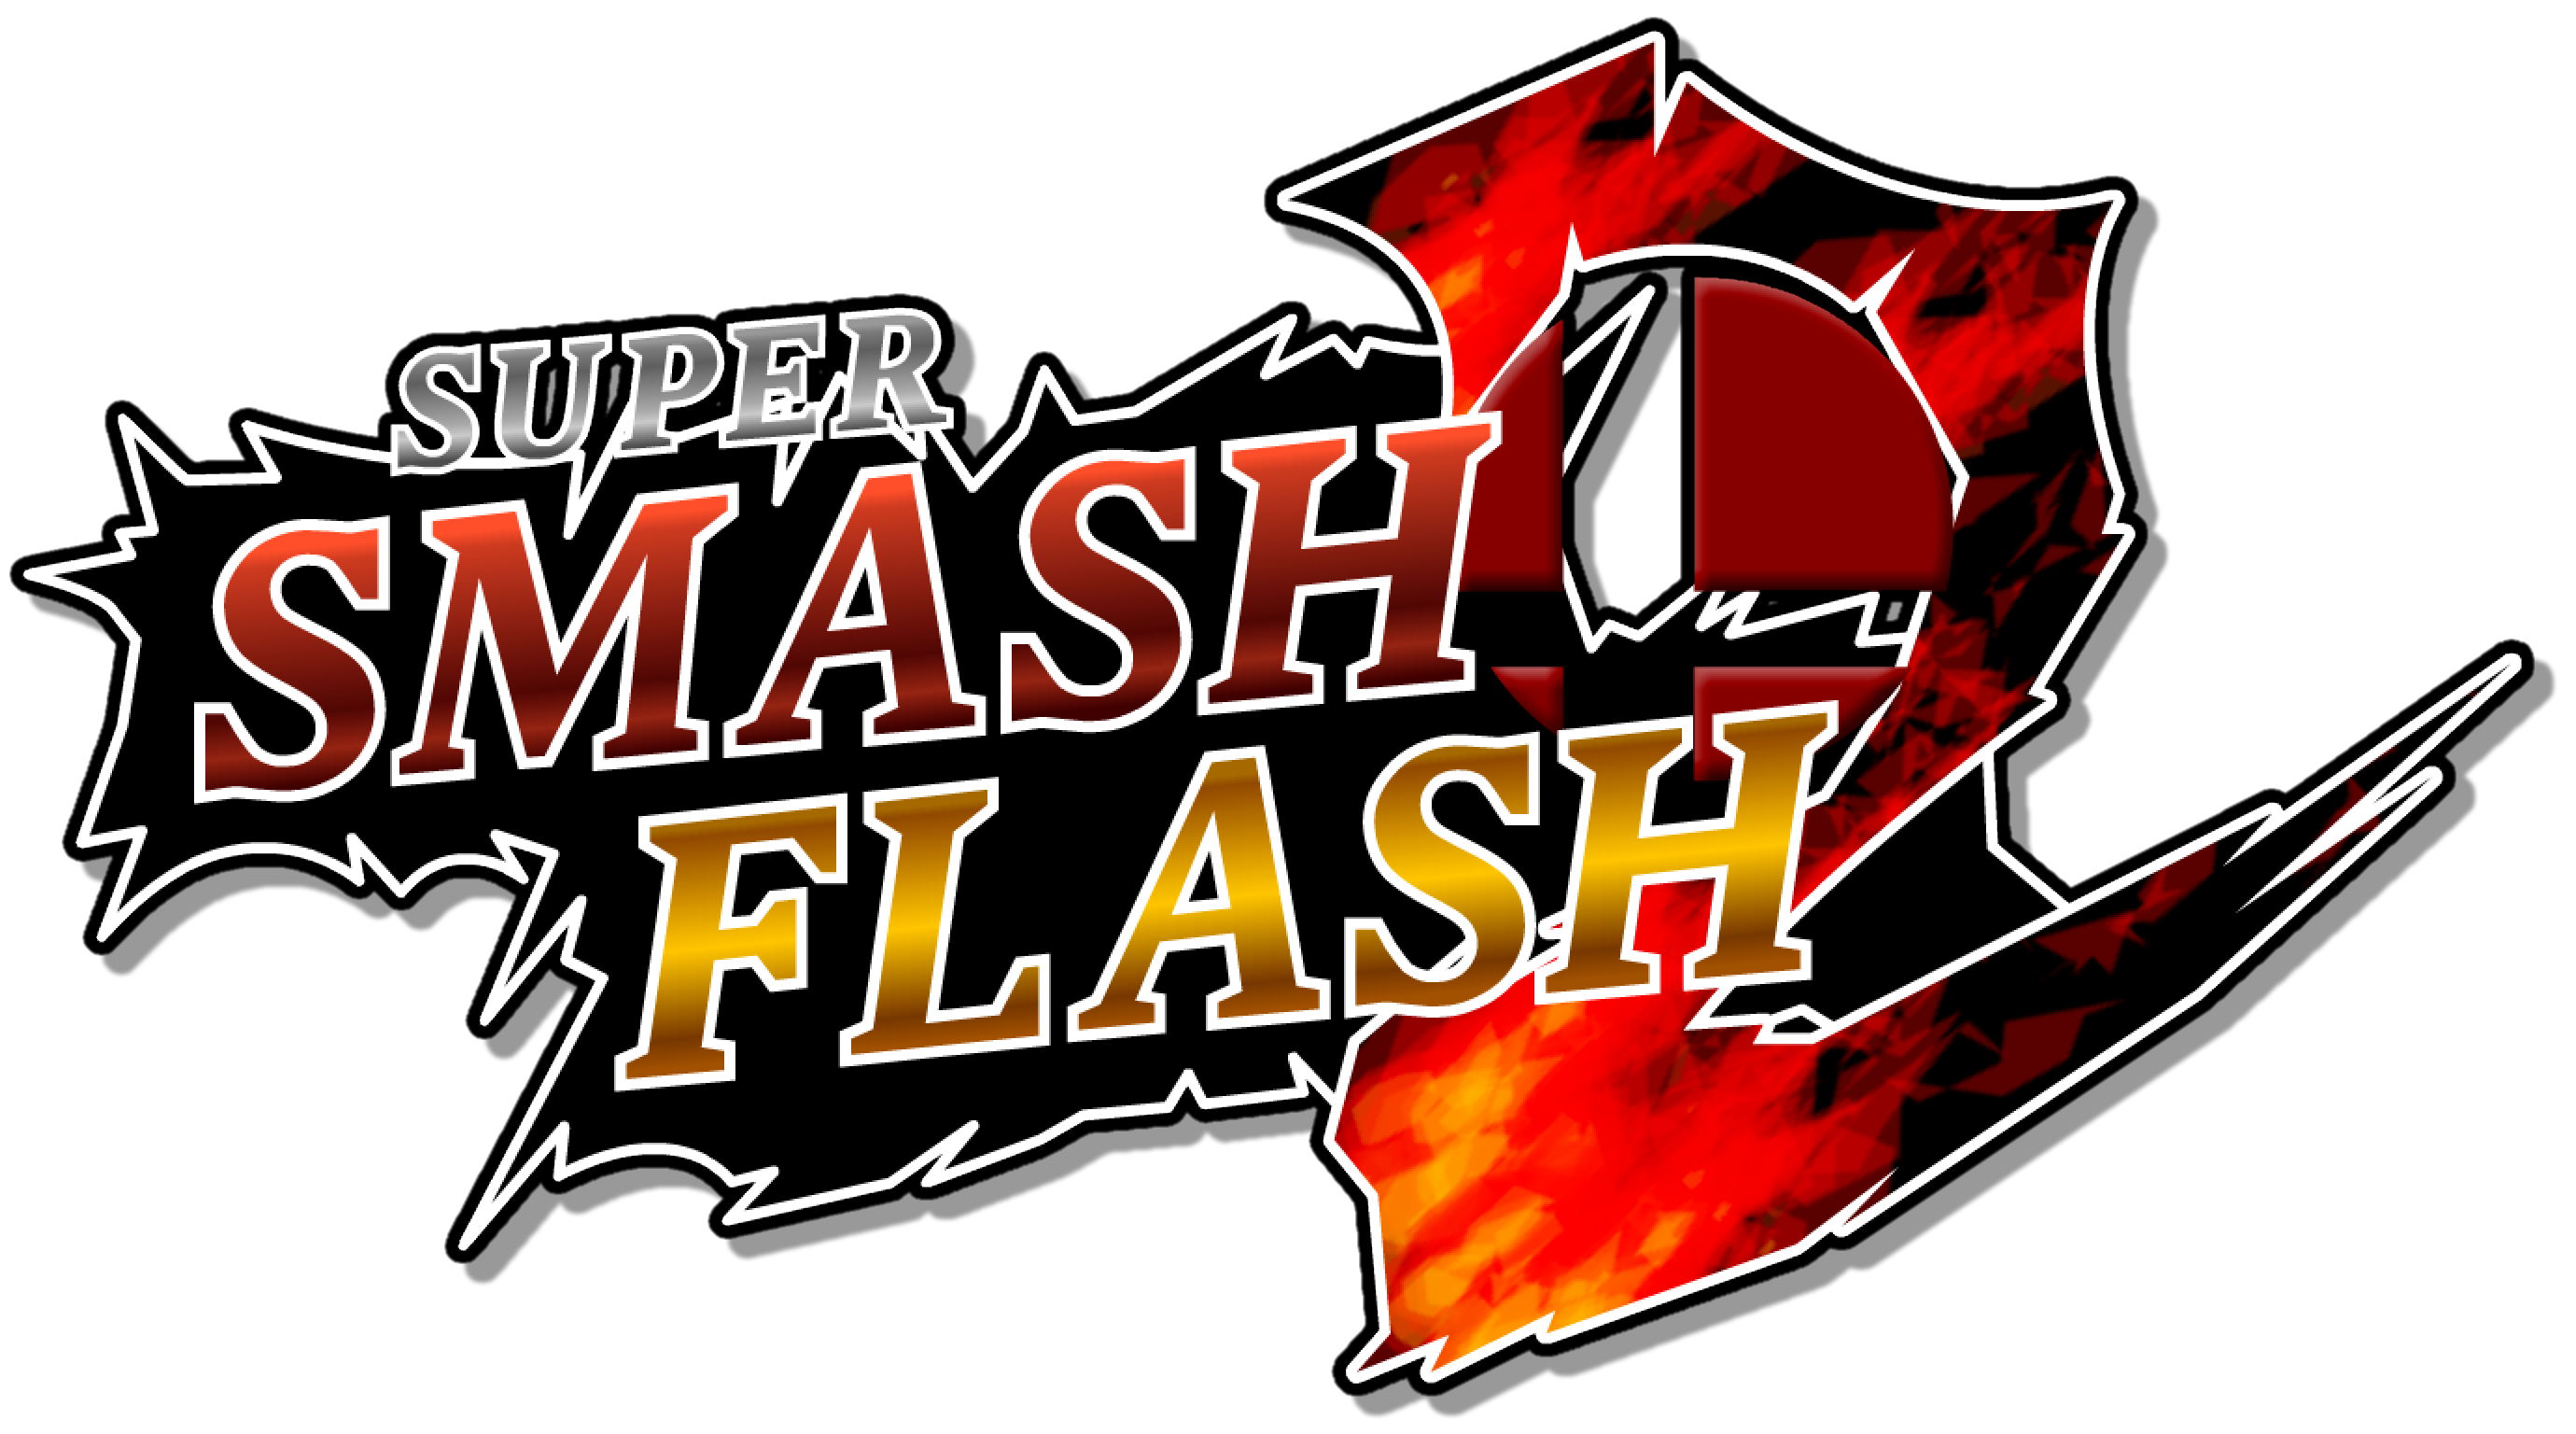 Super Smash Flash 2 – Super Smash Flash